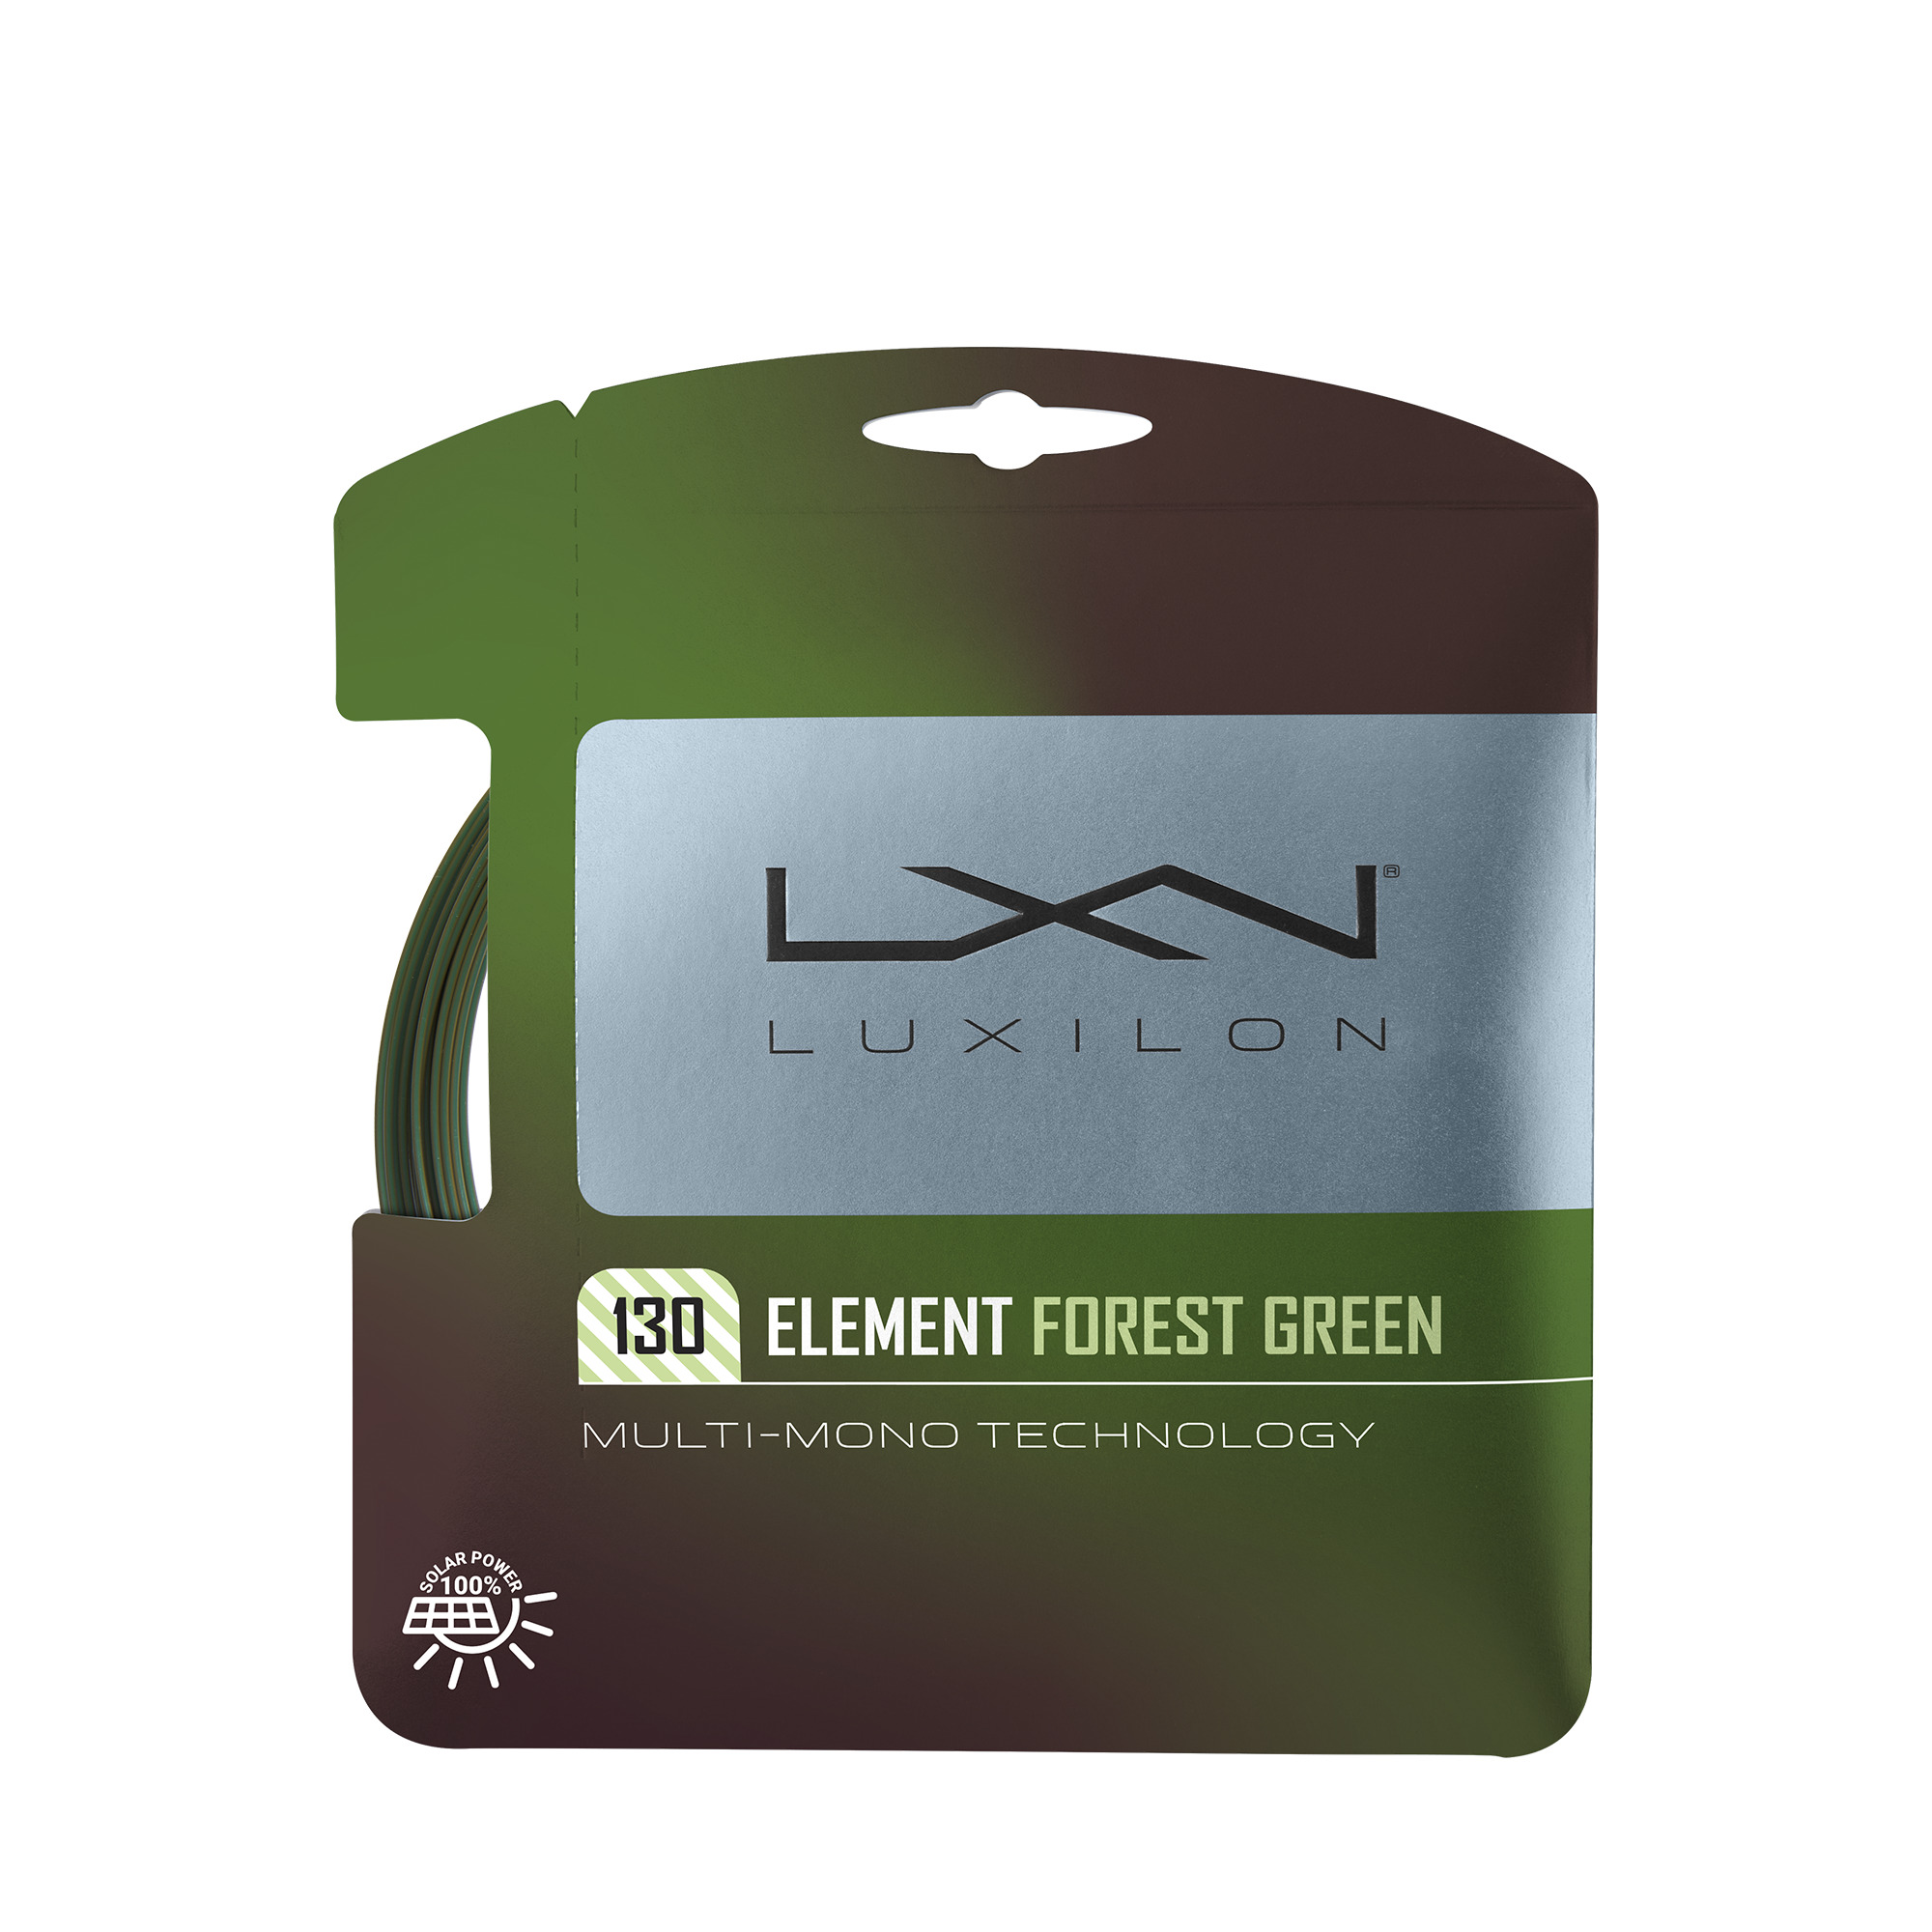 LUXILON ELEMENT FOREST GREEN 1,30mm - 12m SET